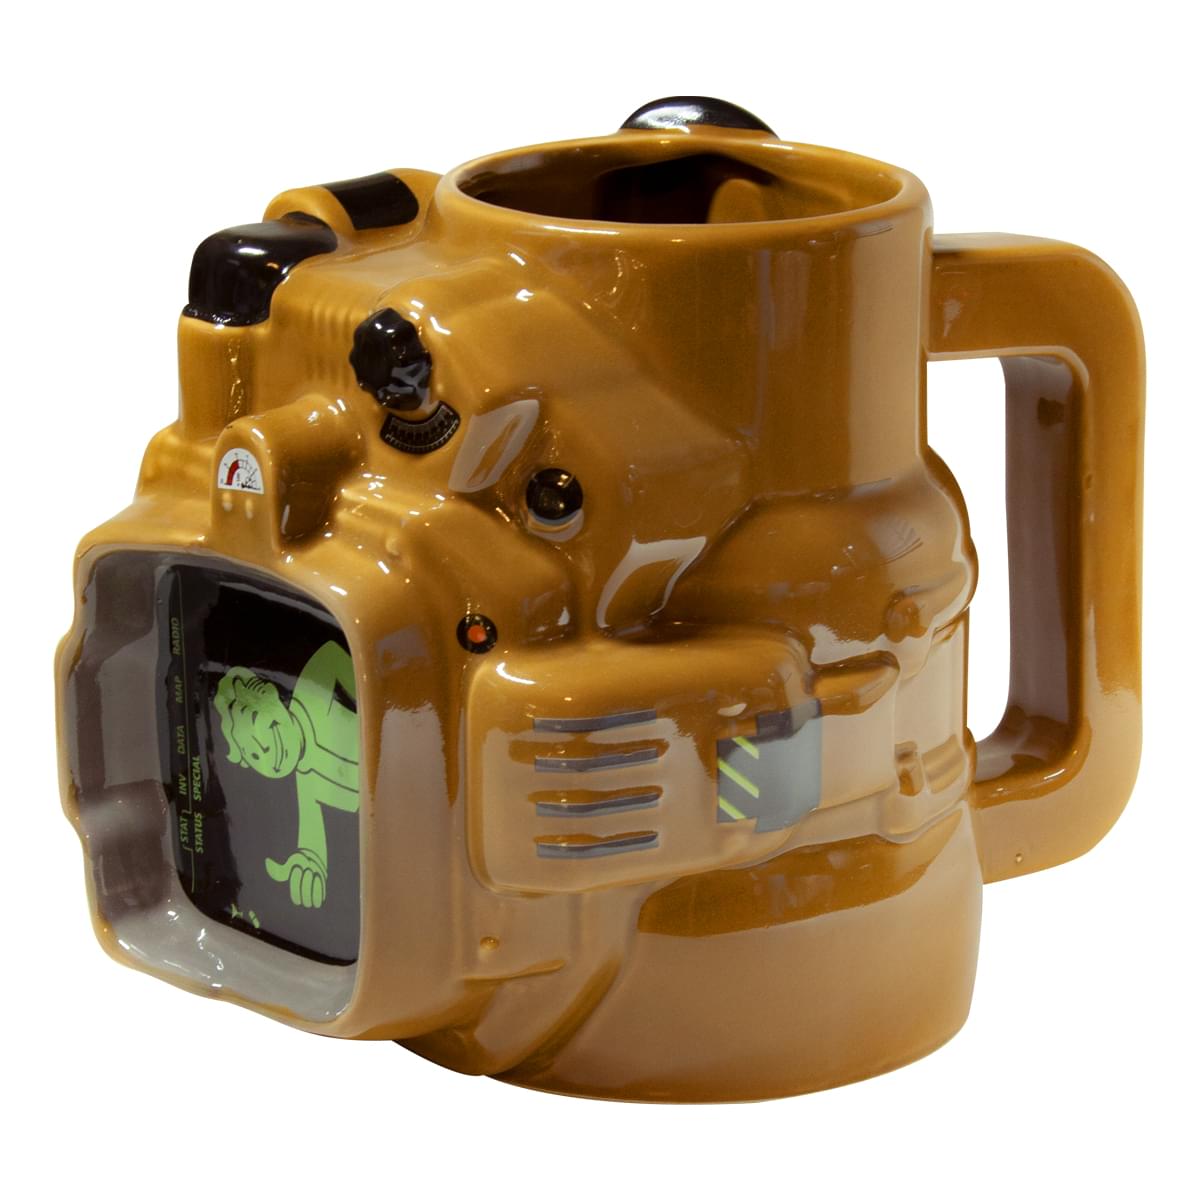 Fallout Pip Boy Ceramic Mug,45 OZ, Fallout Collector’s Edition